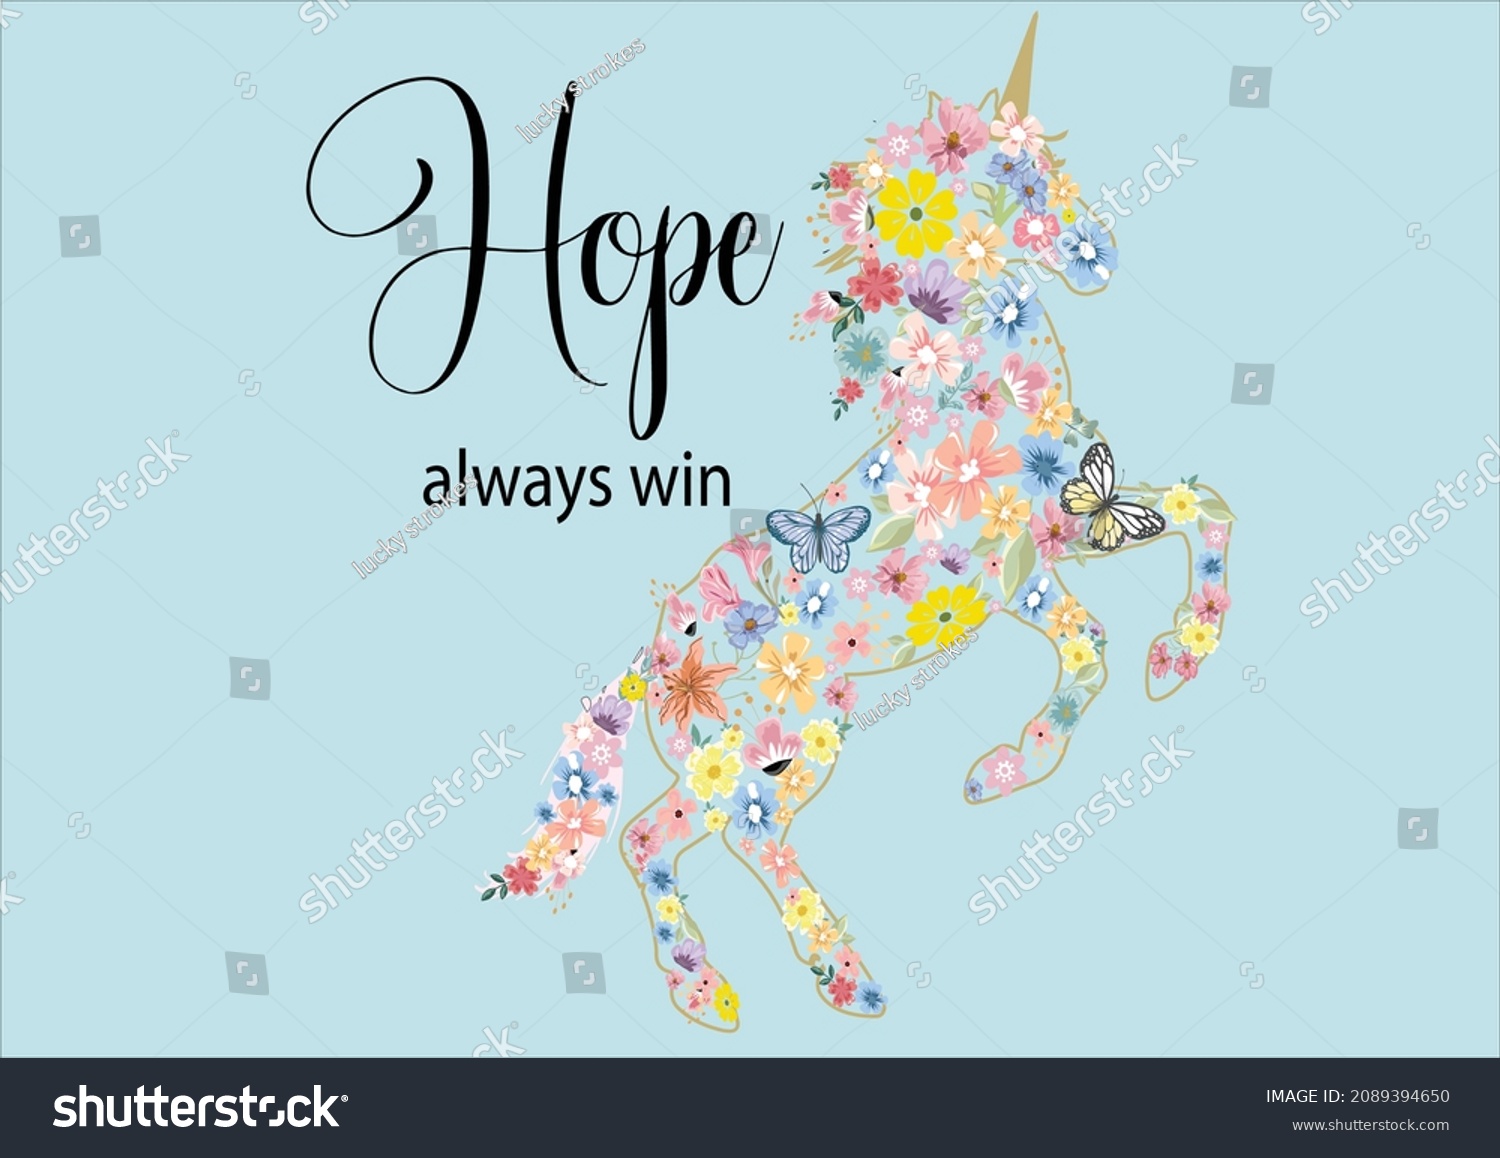 stock-vector-hope-always-win-flower-unicorn-butterflies-and-daisies-positive-quote-flower-design-margarita-2089394650.jpg